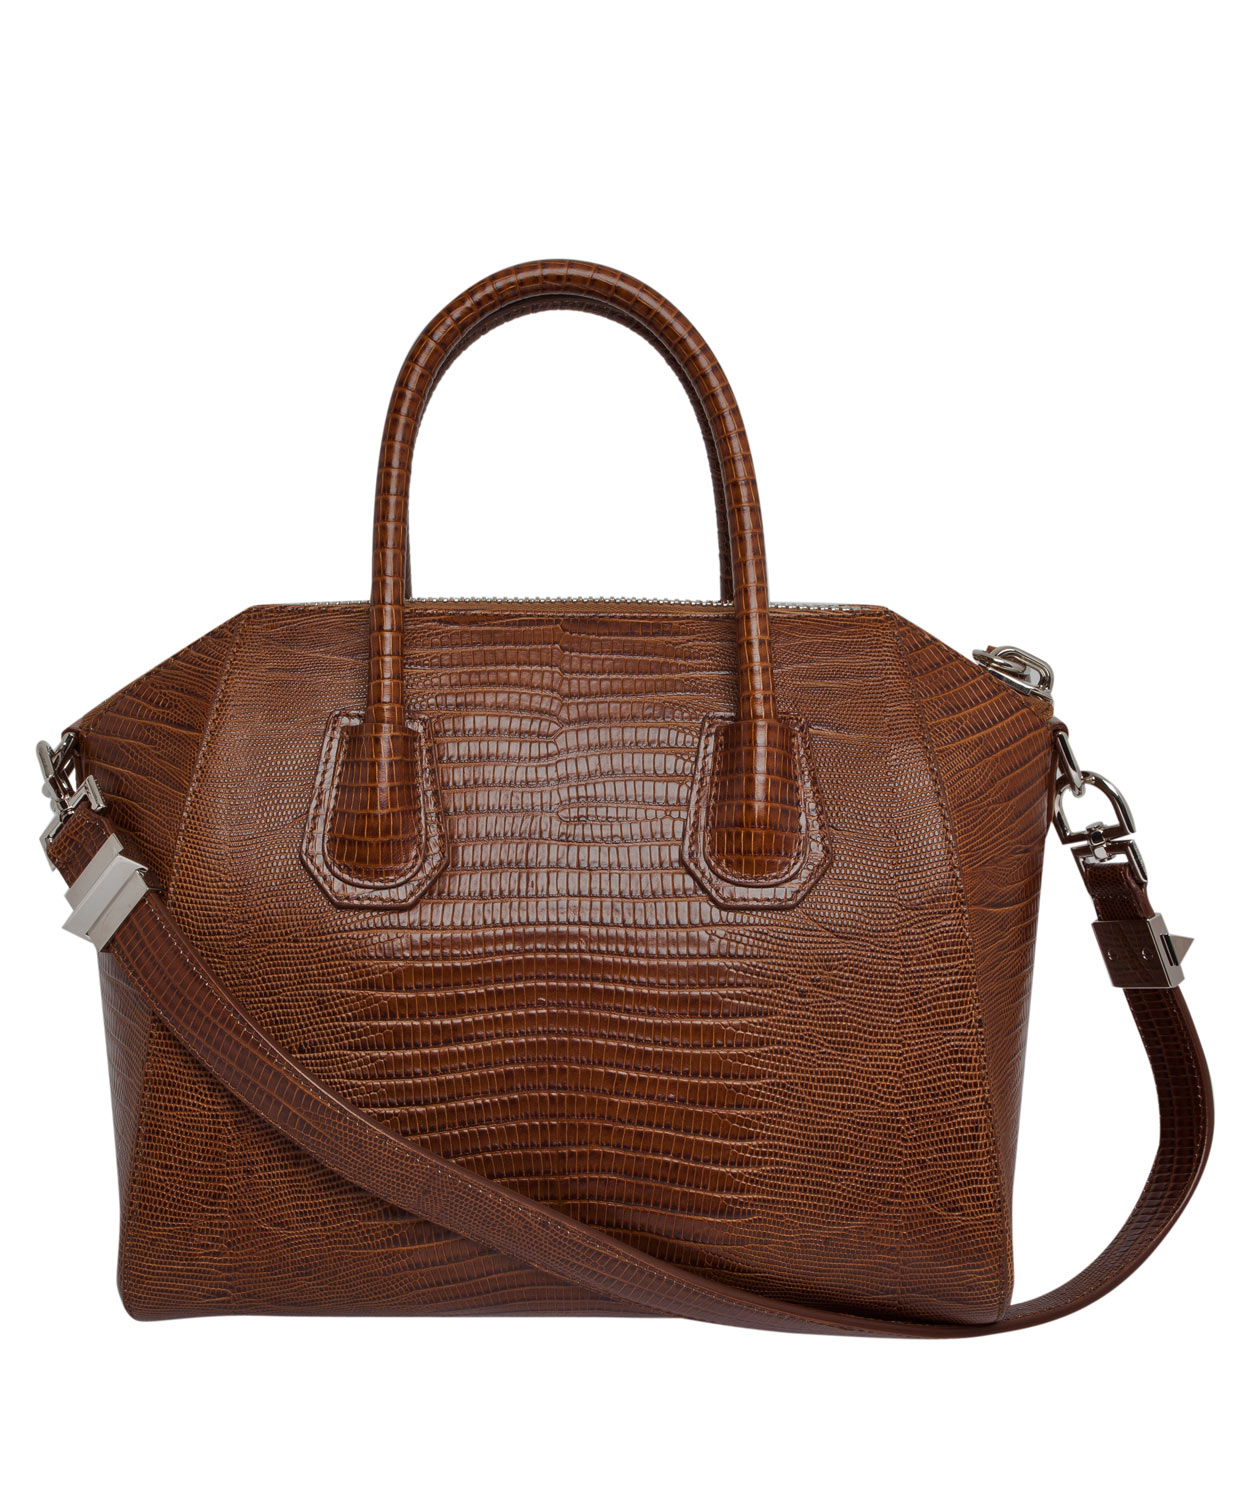 Givenchy Tan Antigona Medium Croc Embossed Leather Tote Bag in Brown - Lyst